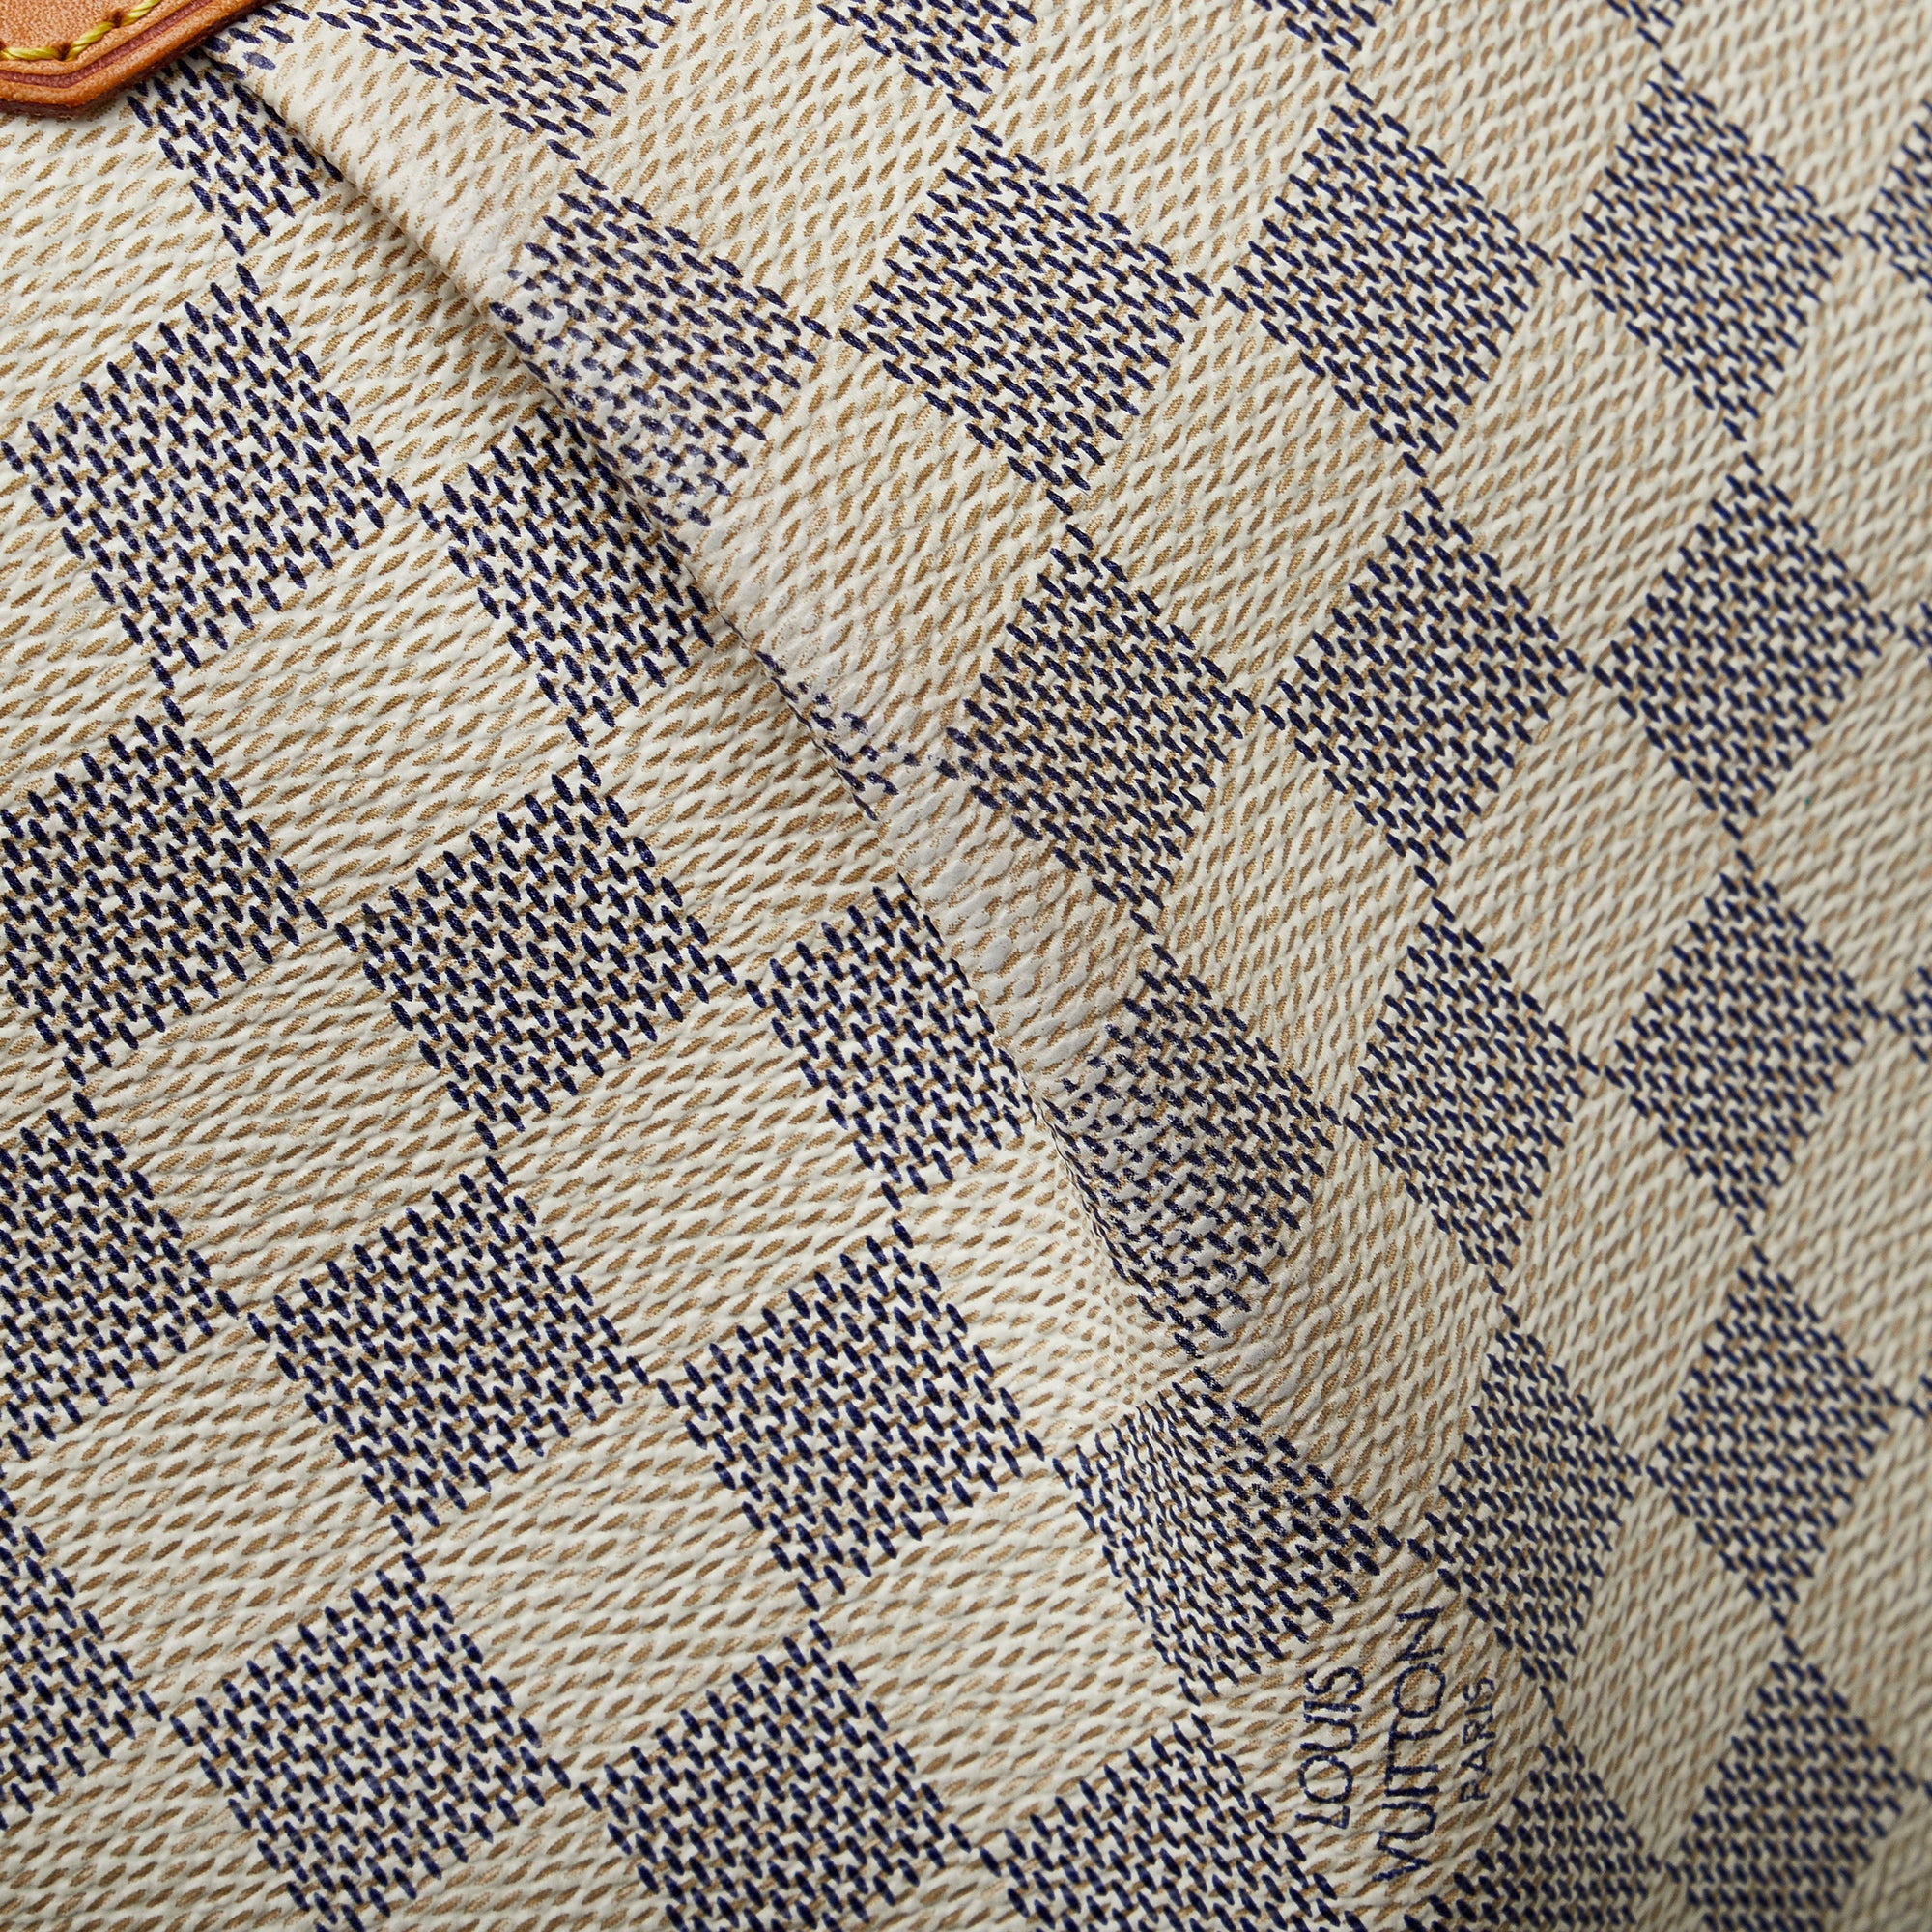 Louis Vuitton - Authenticated Siracusa Handbag - Cloth White Tartan for Women, Good Condition